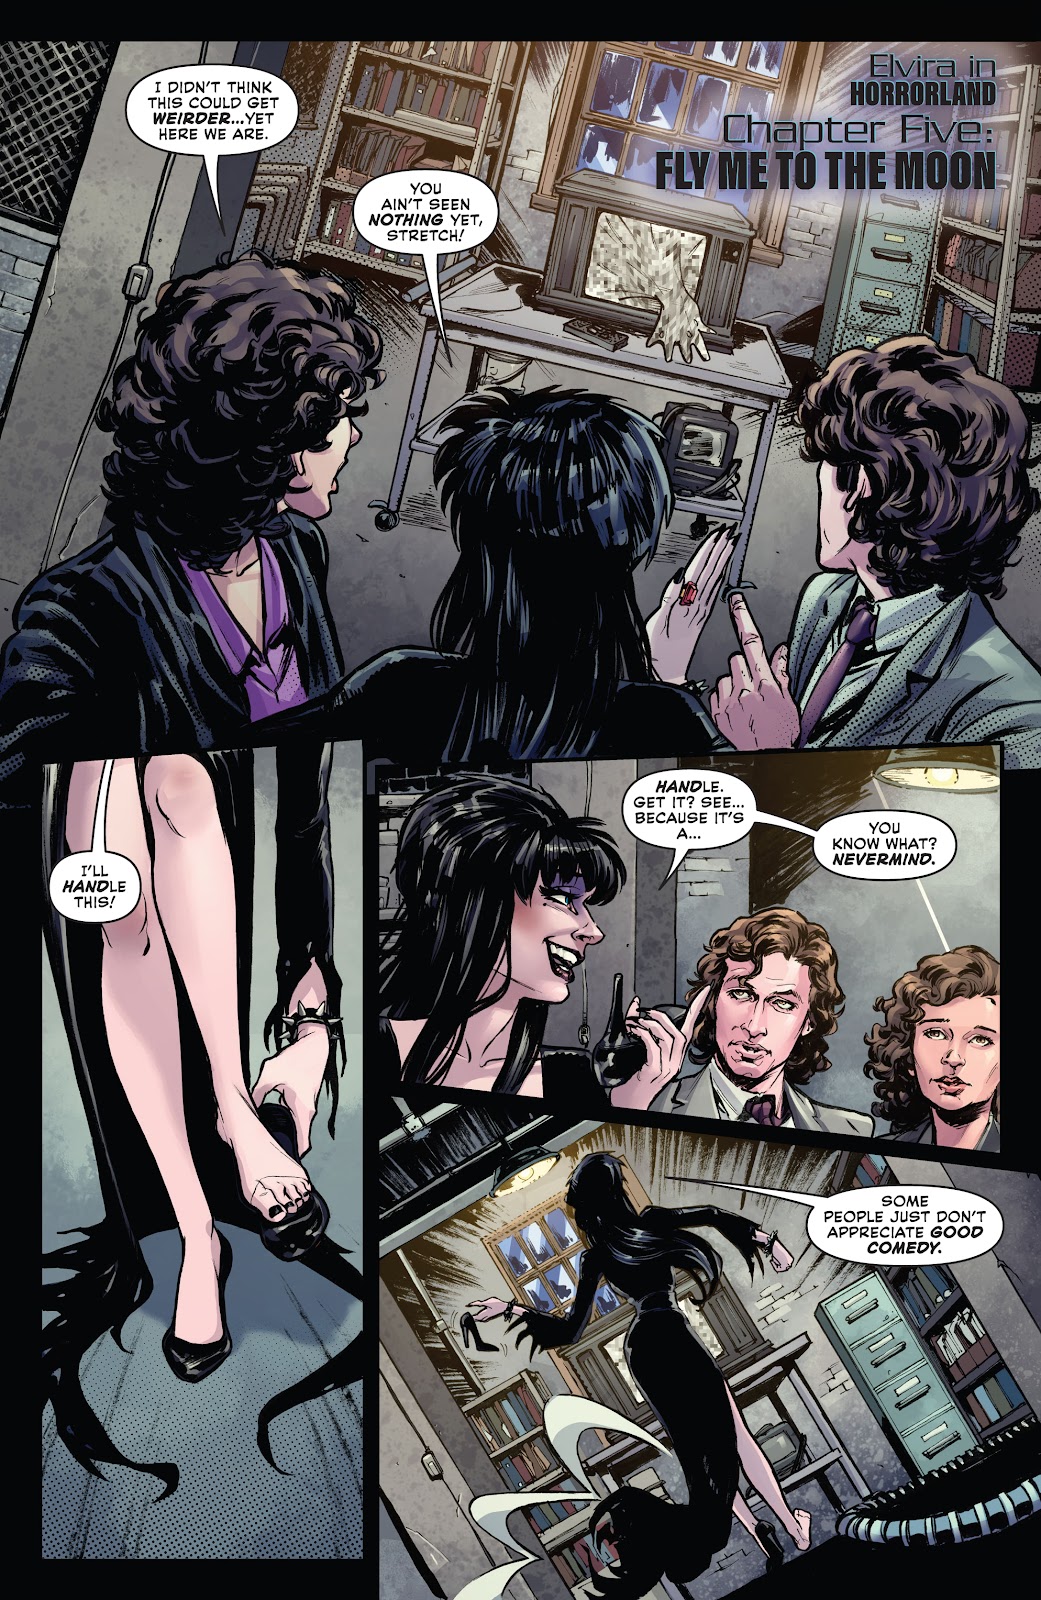 Elvira in Horrorland issue 5 - Page 7